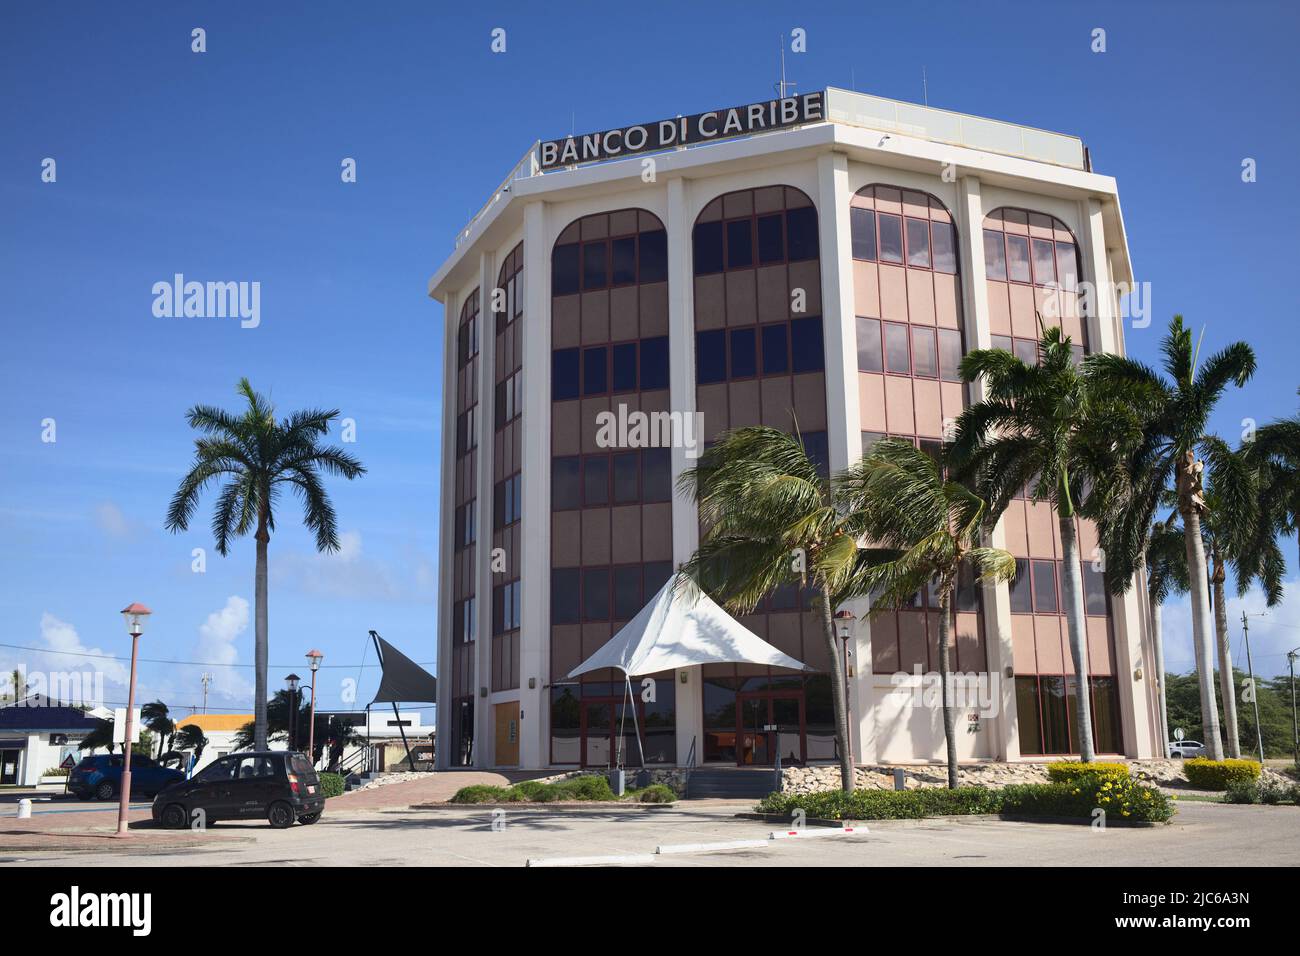 ORANJESTAD, ARUBA - DECEMBER 4, 2021: The building of the Banco di Caribe bank at Vondellaan 31 in Oranjestad on the Caribbean island of Aruba Stock Photo